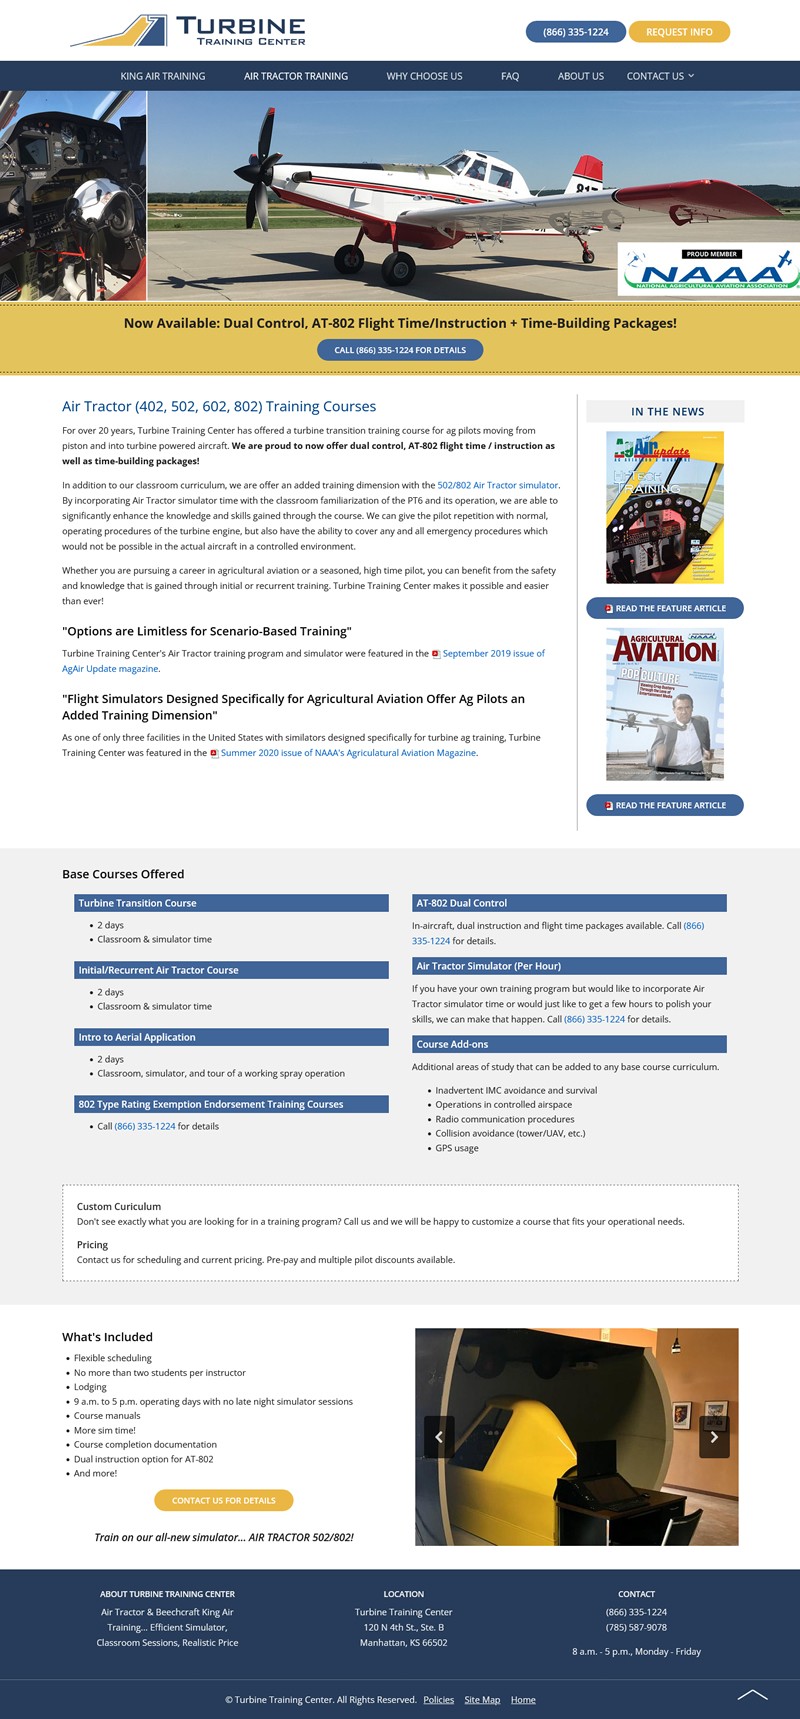 Turbine Training website screenshot Air Tractor training program